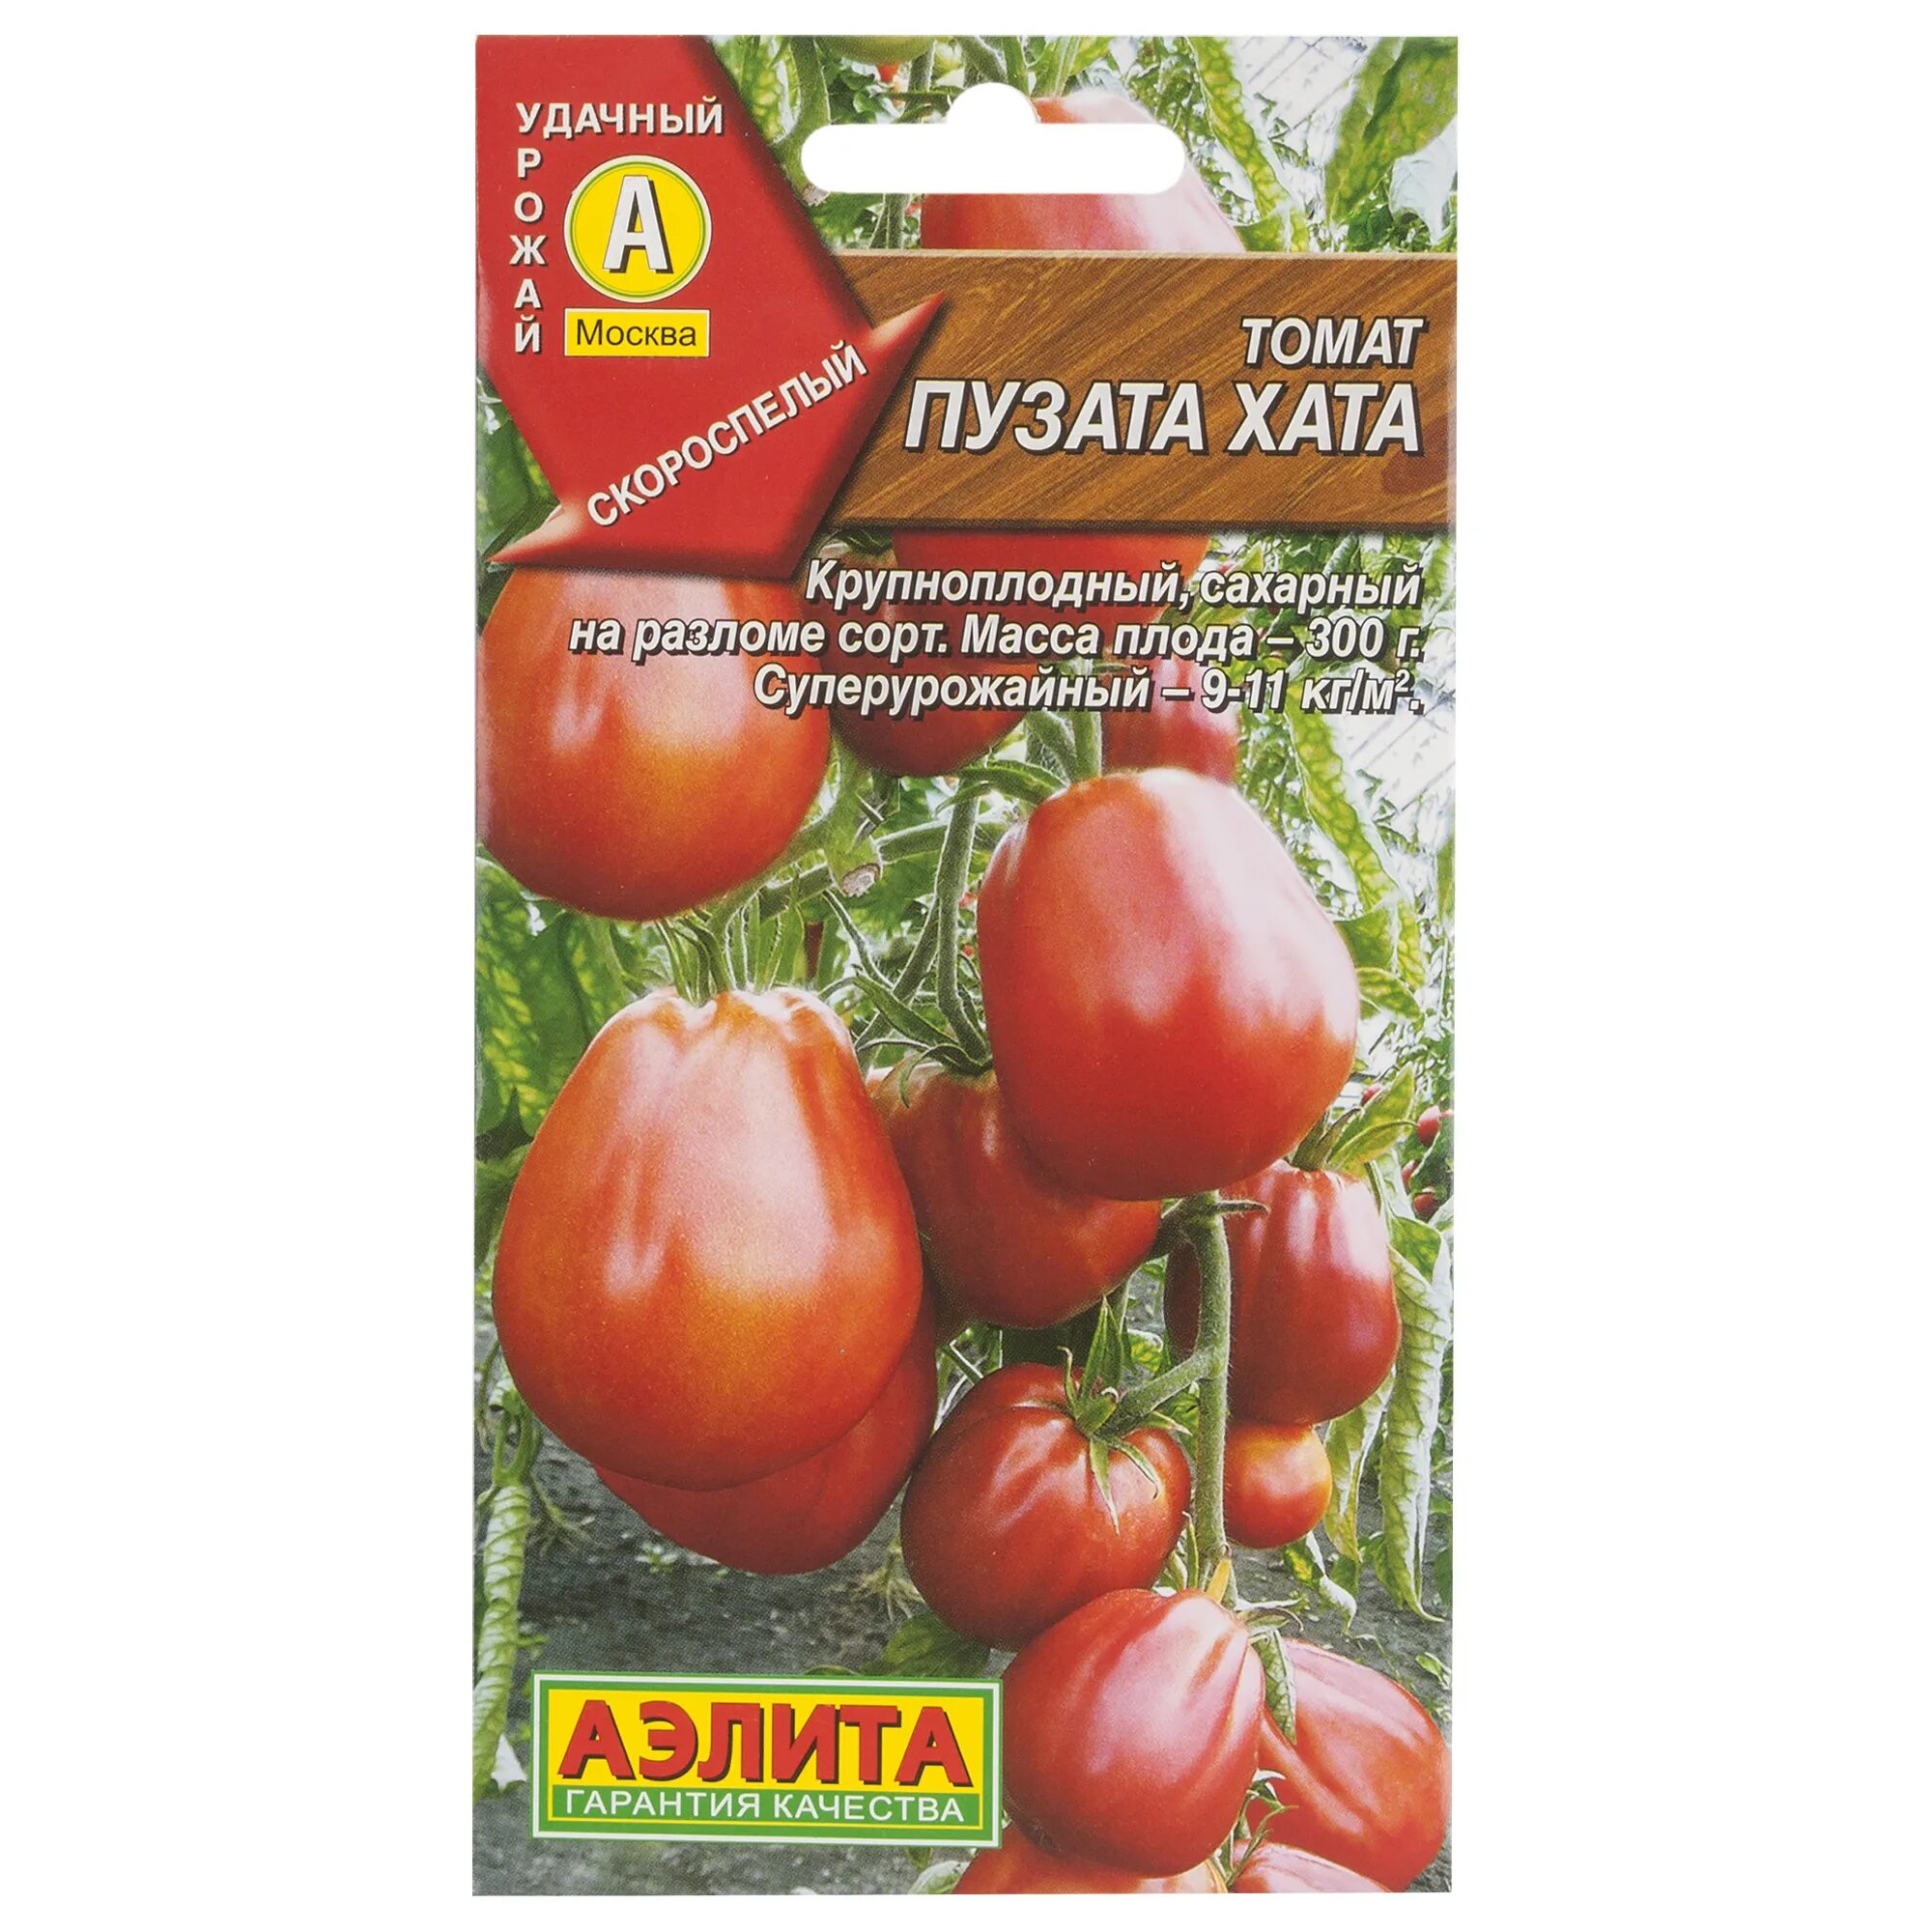 Пузата хата помидоры описание сорта отзывы садоводов. Семена томат Пузата хата.